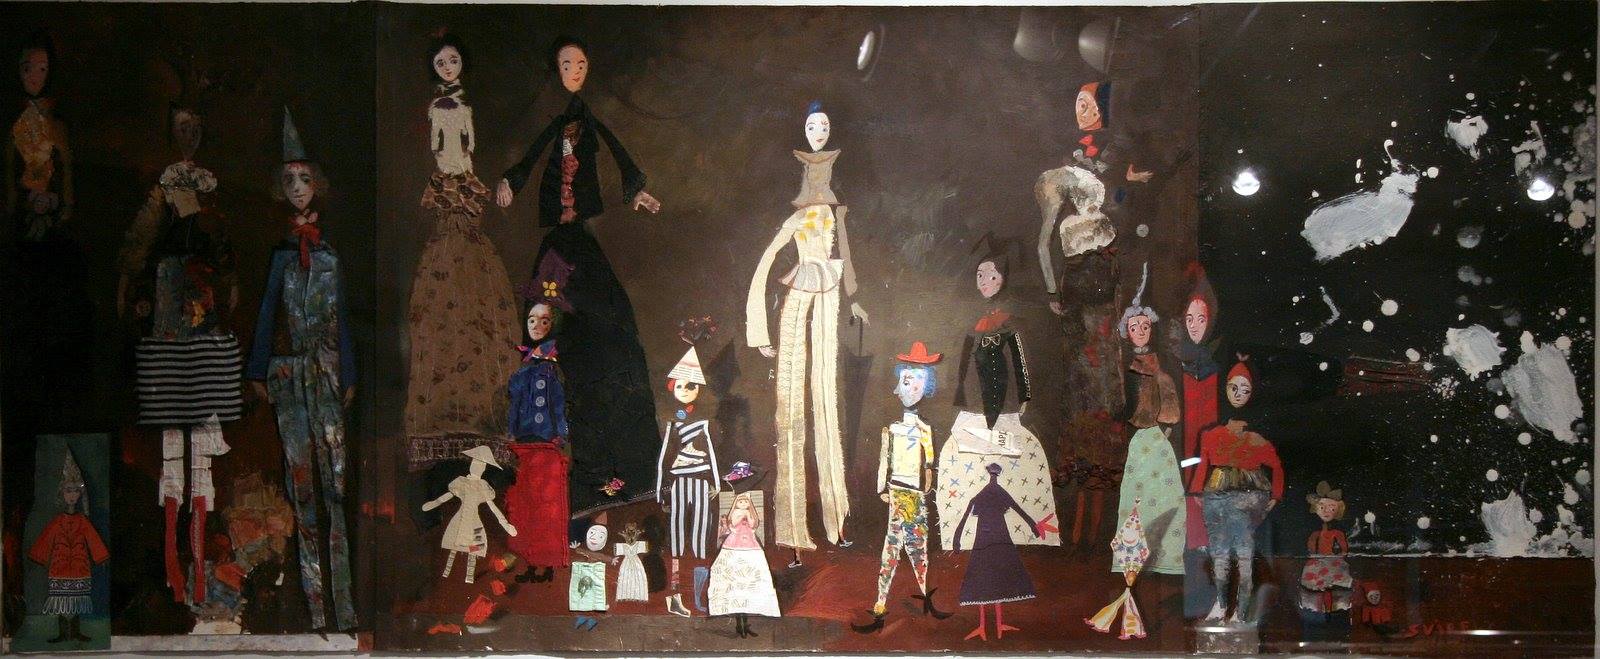 Theatre. Temo Svirely, georgian-ukrainian artist (born 1965 in Georgia- died 2014 in Ukraine), textile, acryl, pastel on paper (collage), 2007